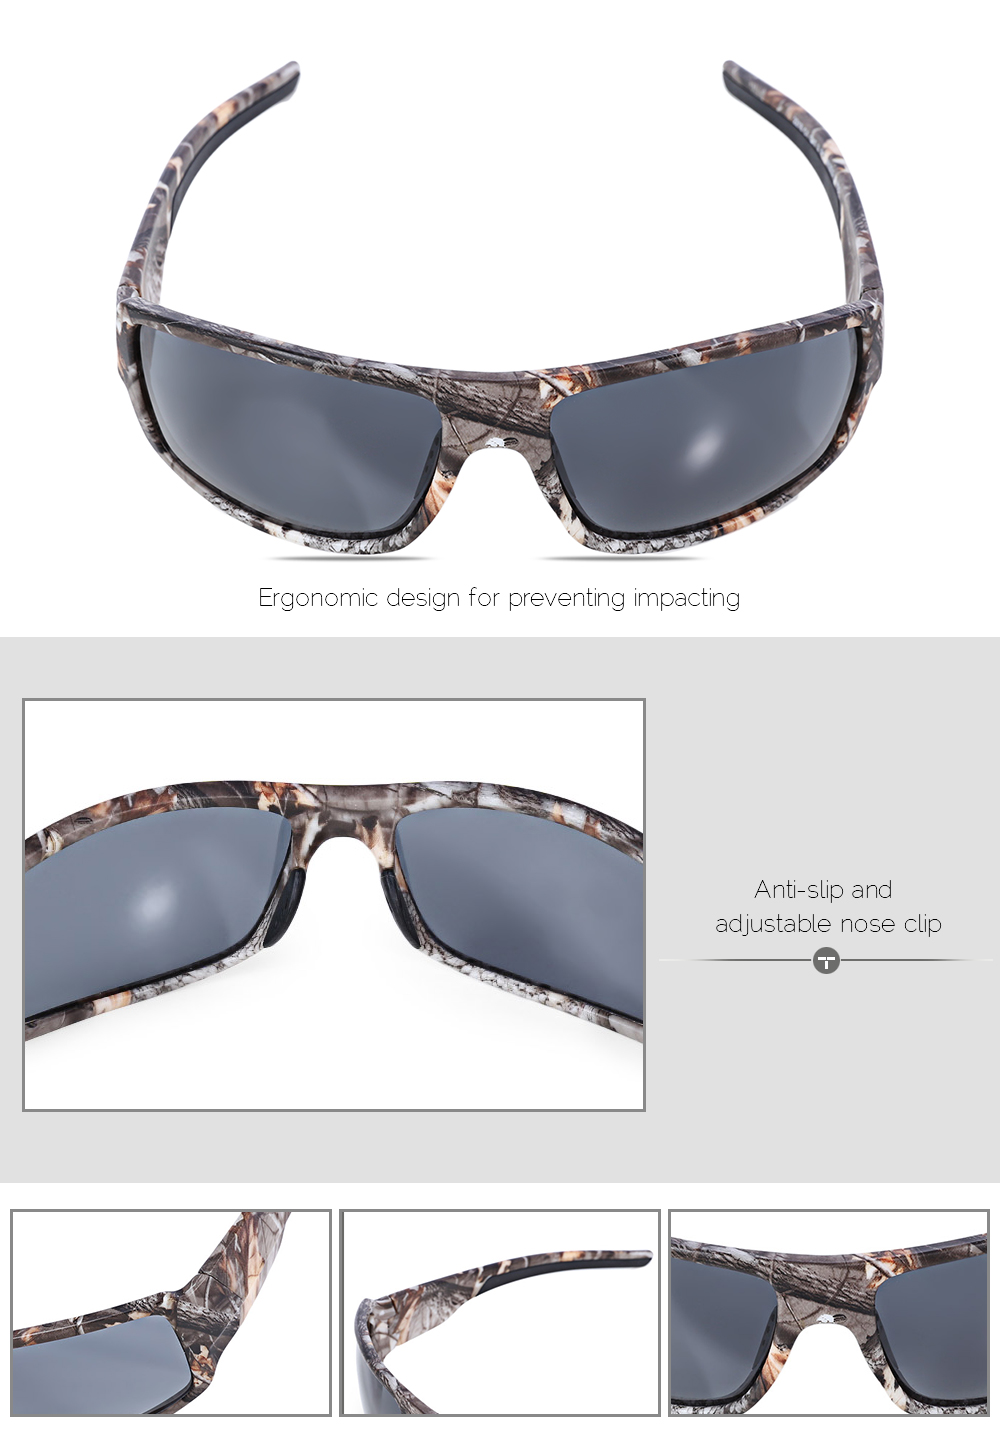 Outdoor Sports Camouflage Frame Windproof Polarized Sunglasses Fishing Eyeglasses 